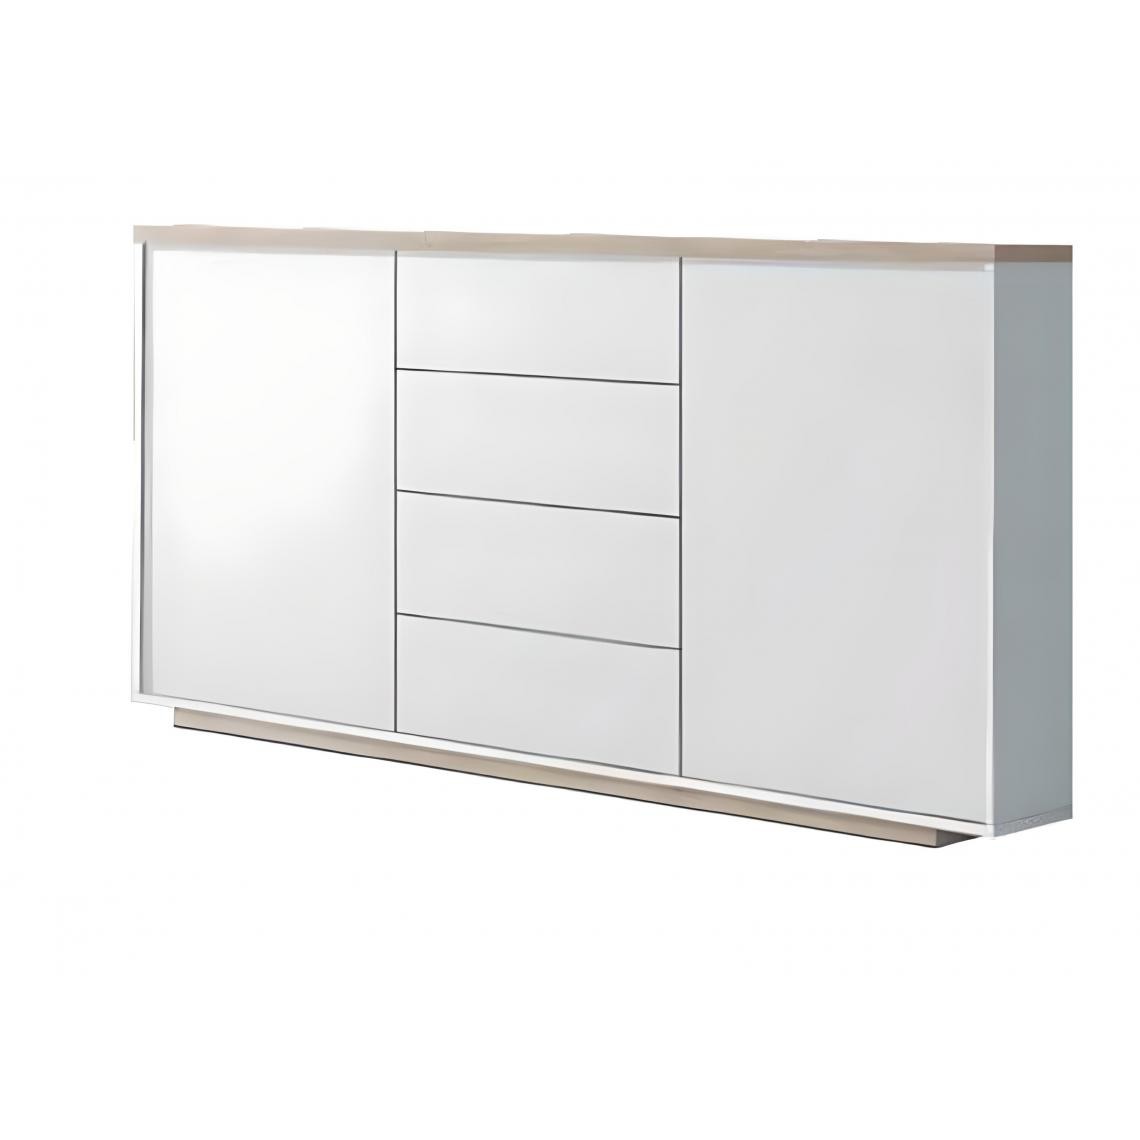 Pegane - Buffet 2 portes + 4 tiroirs coloris Blanc / Chêne Cambrian - Longueur 183 x profondeur 35 x hauteur 85 cm - Buffets, chiffonniers